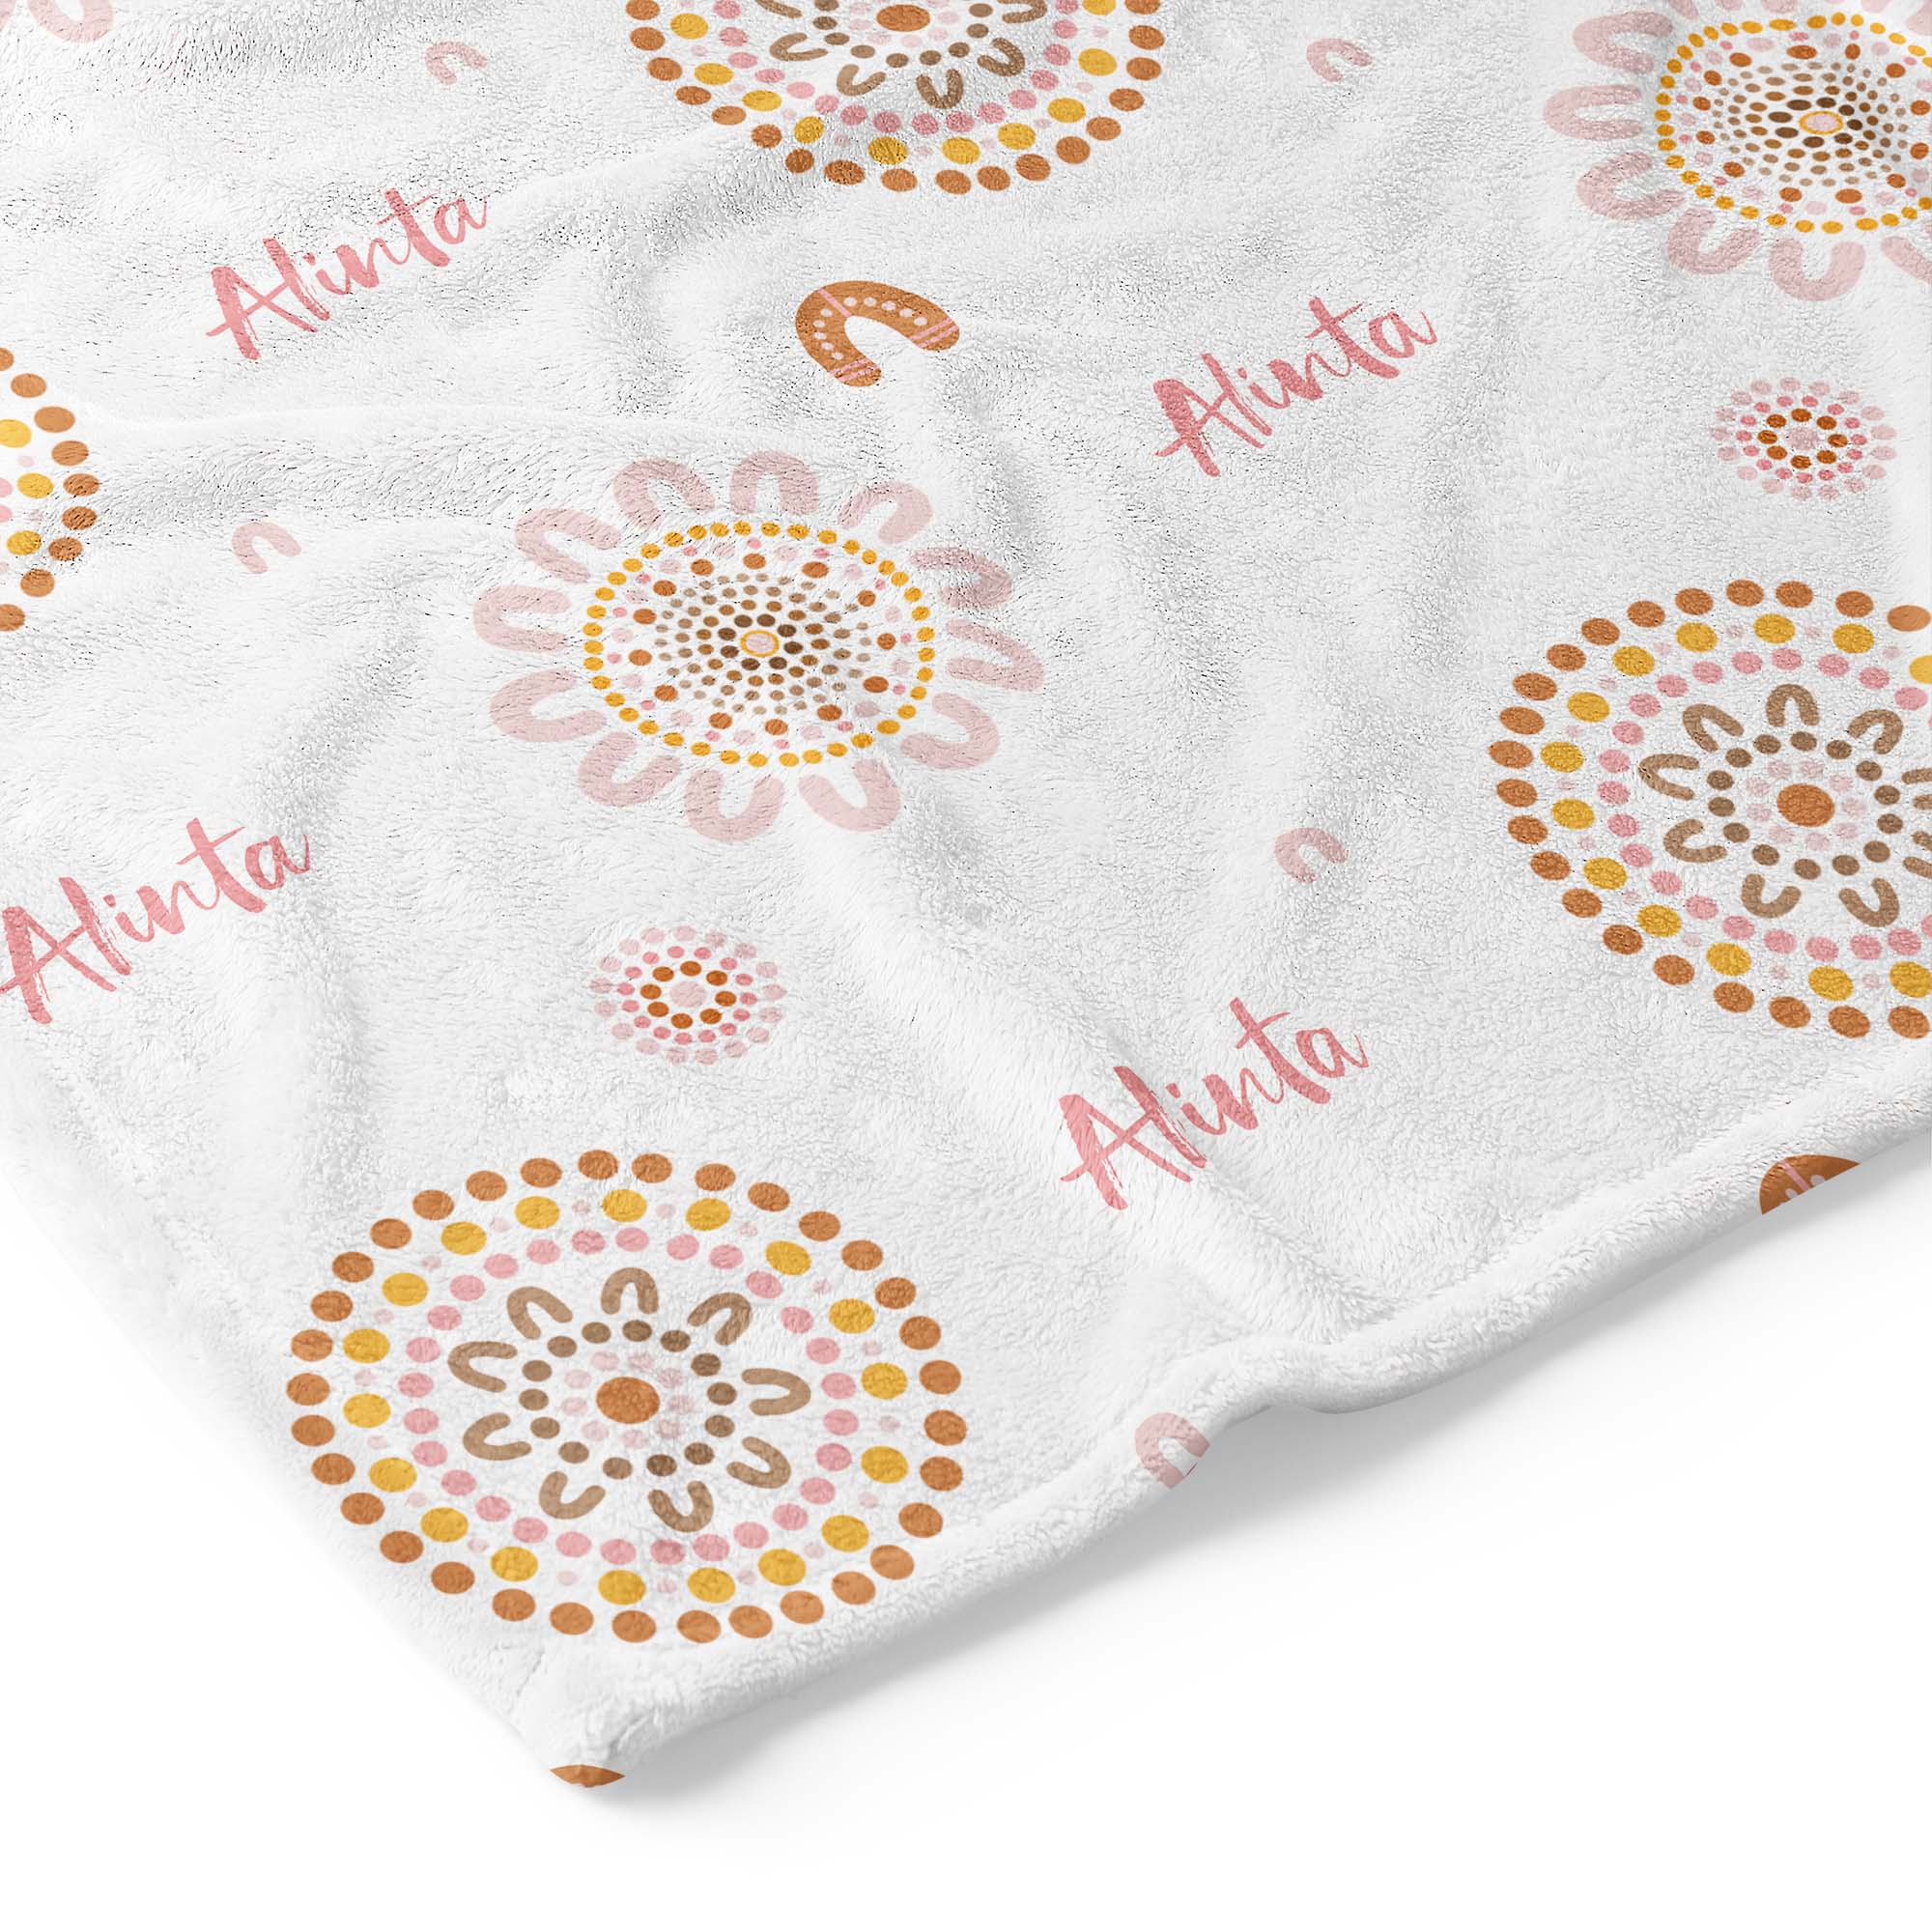 Little Sun - Personalised Keepsake Blanket